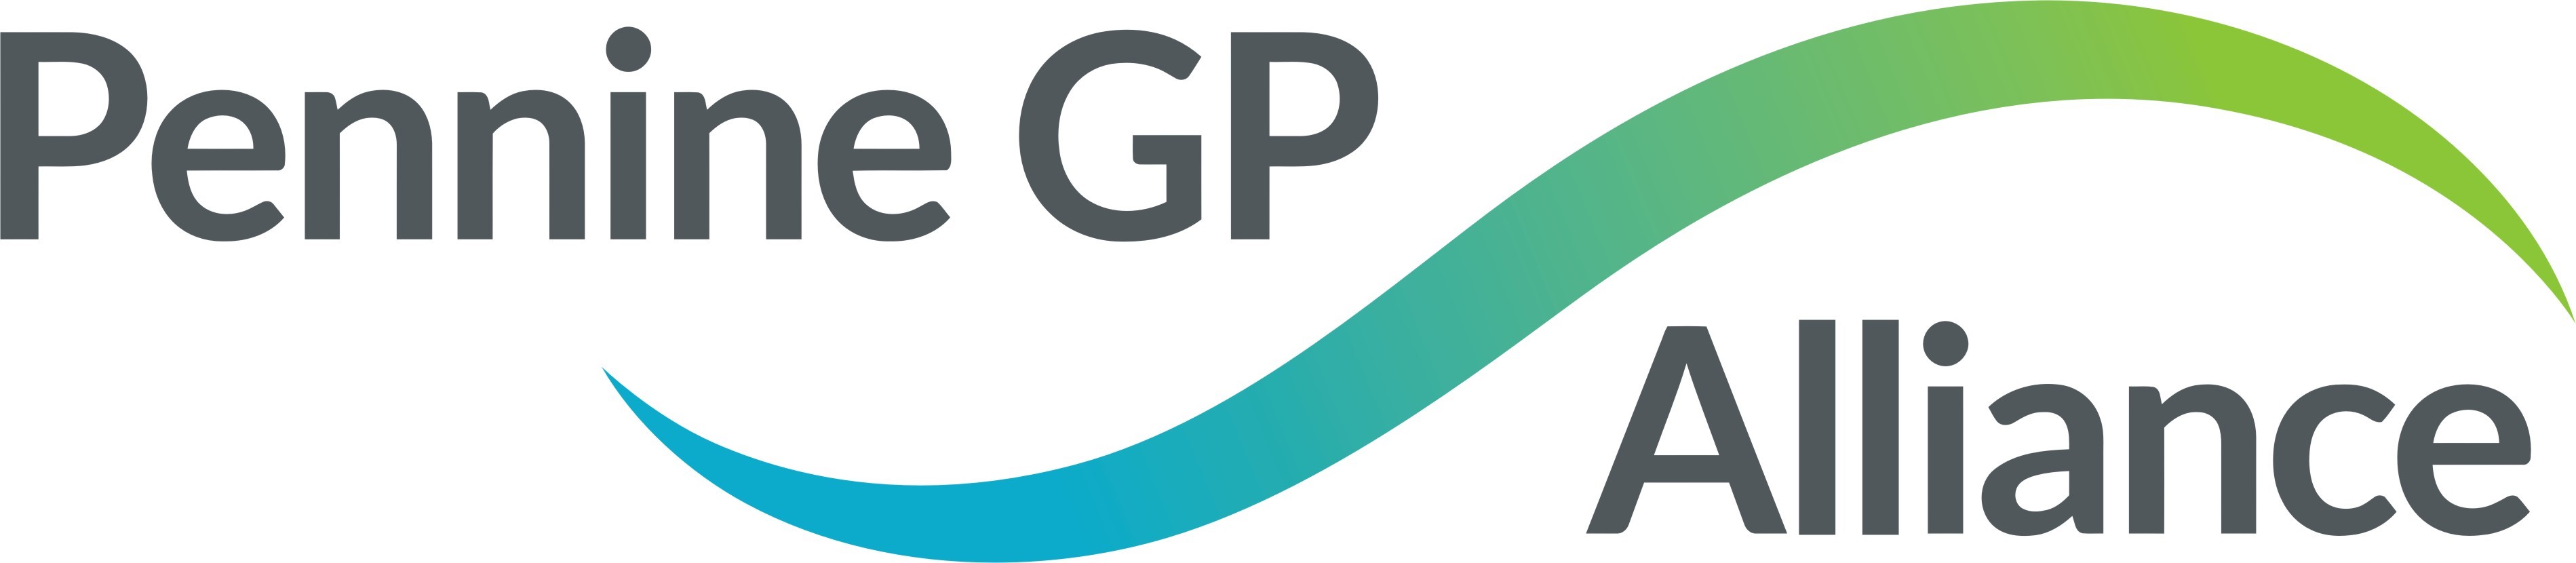 logo for Pennine GP Alliance